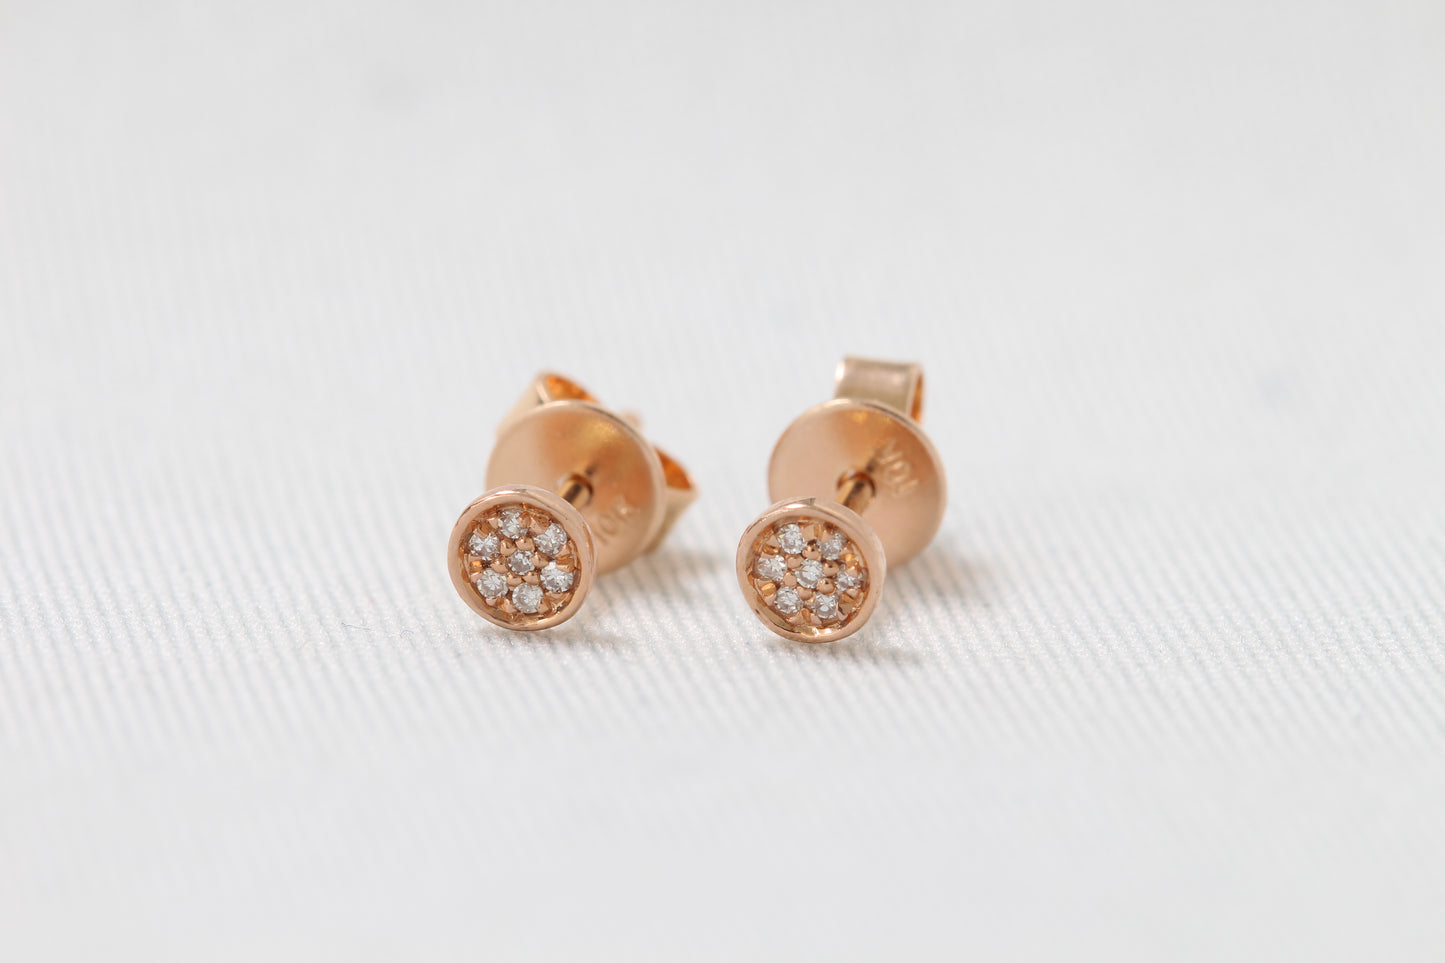 10k diamond earrings in rose, white, & yellow gold